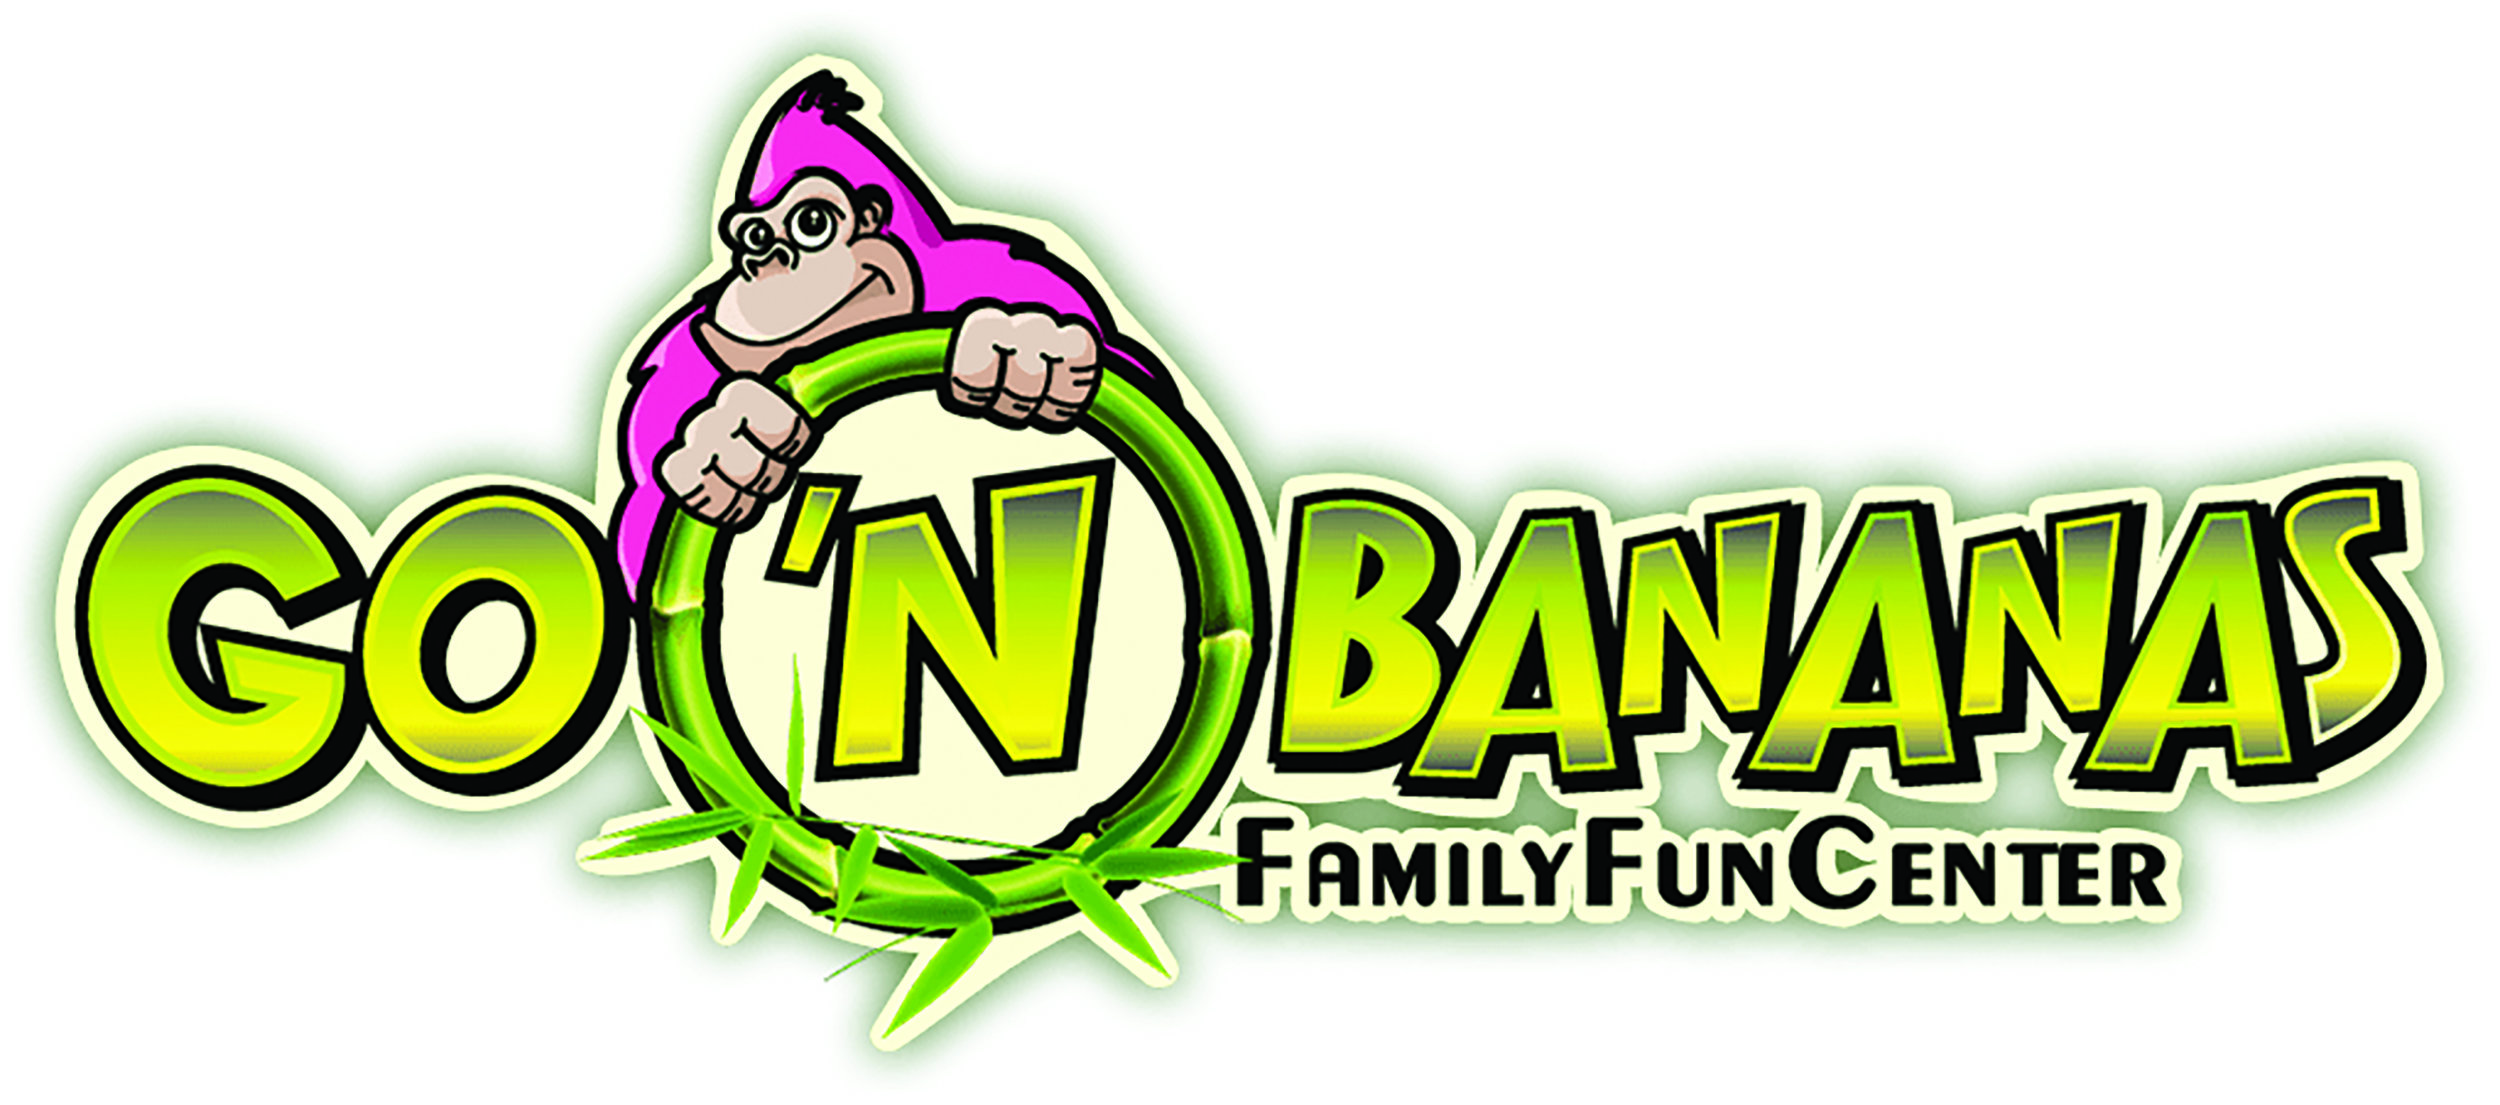 go-n-bananas-logo CMYK 300 res.jpg